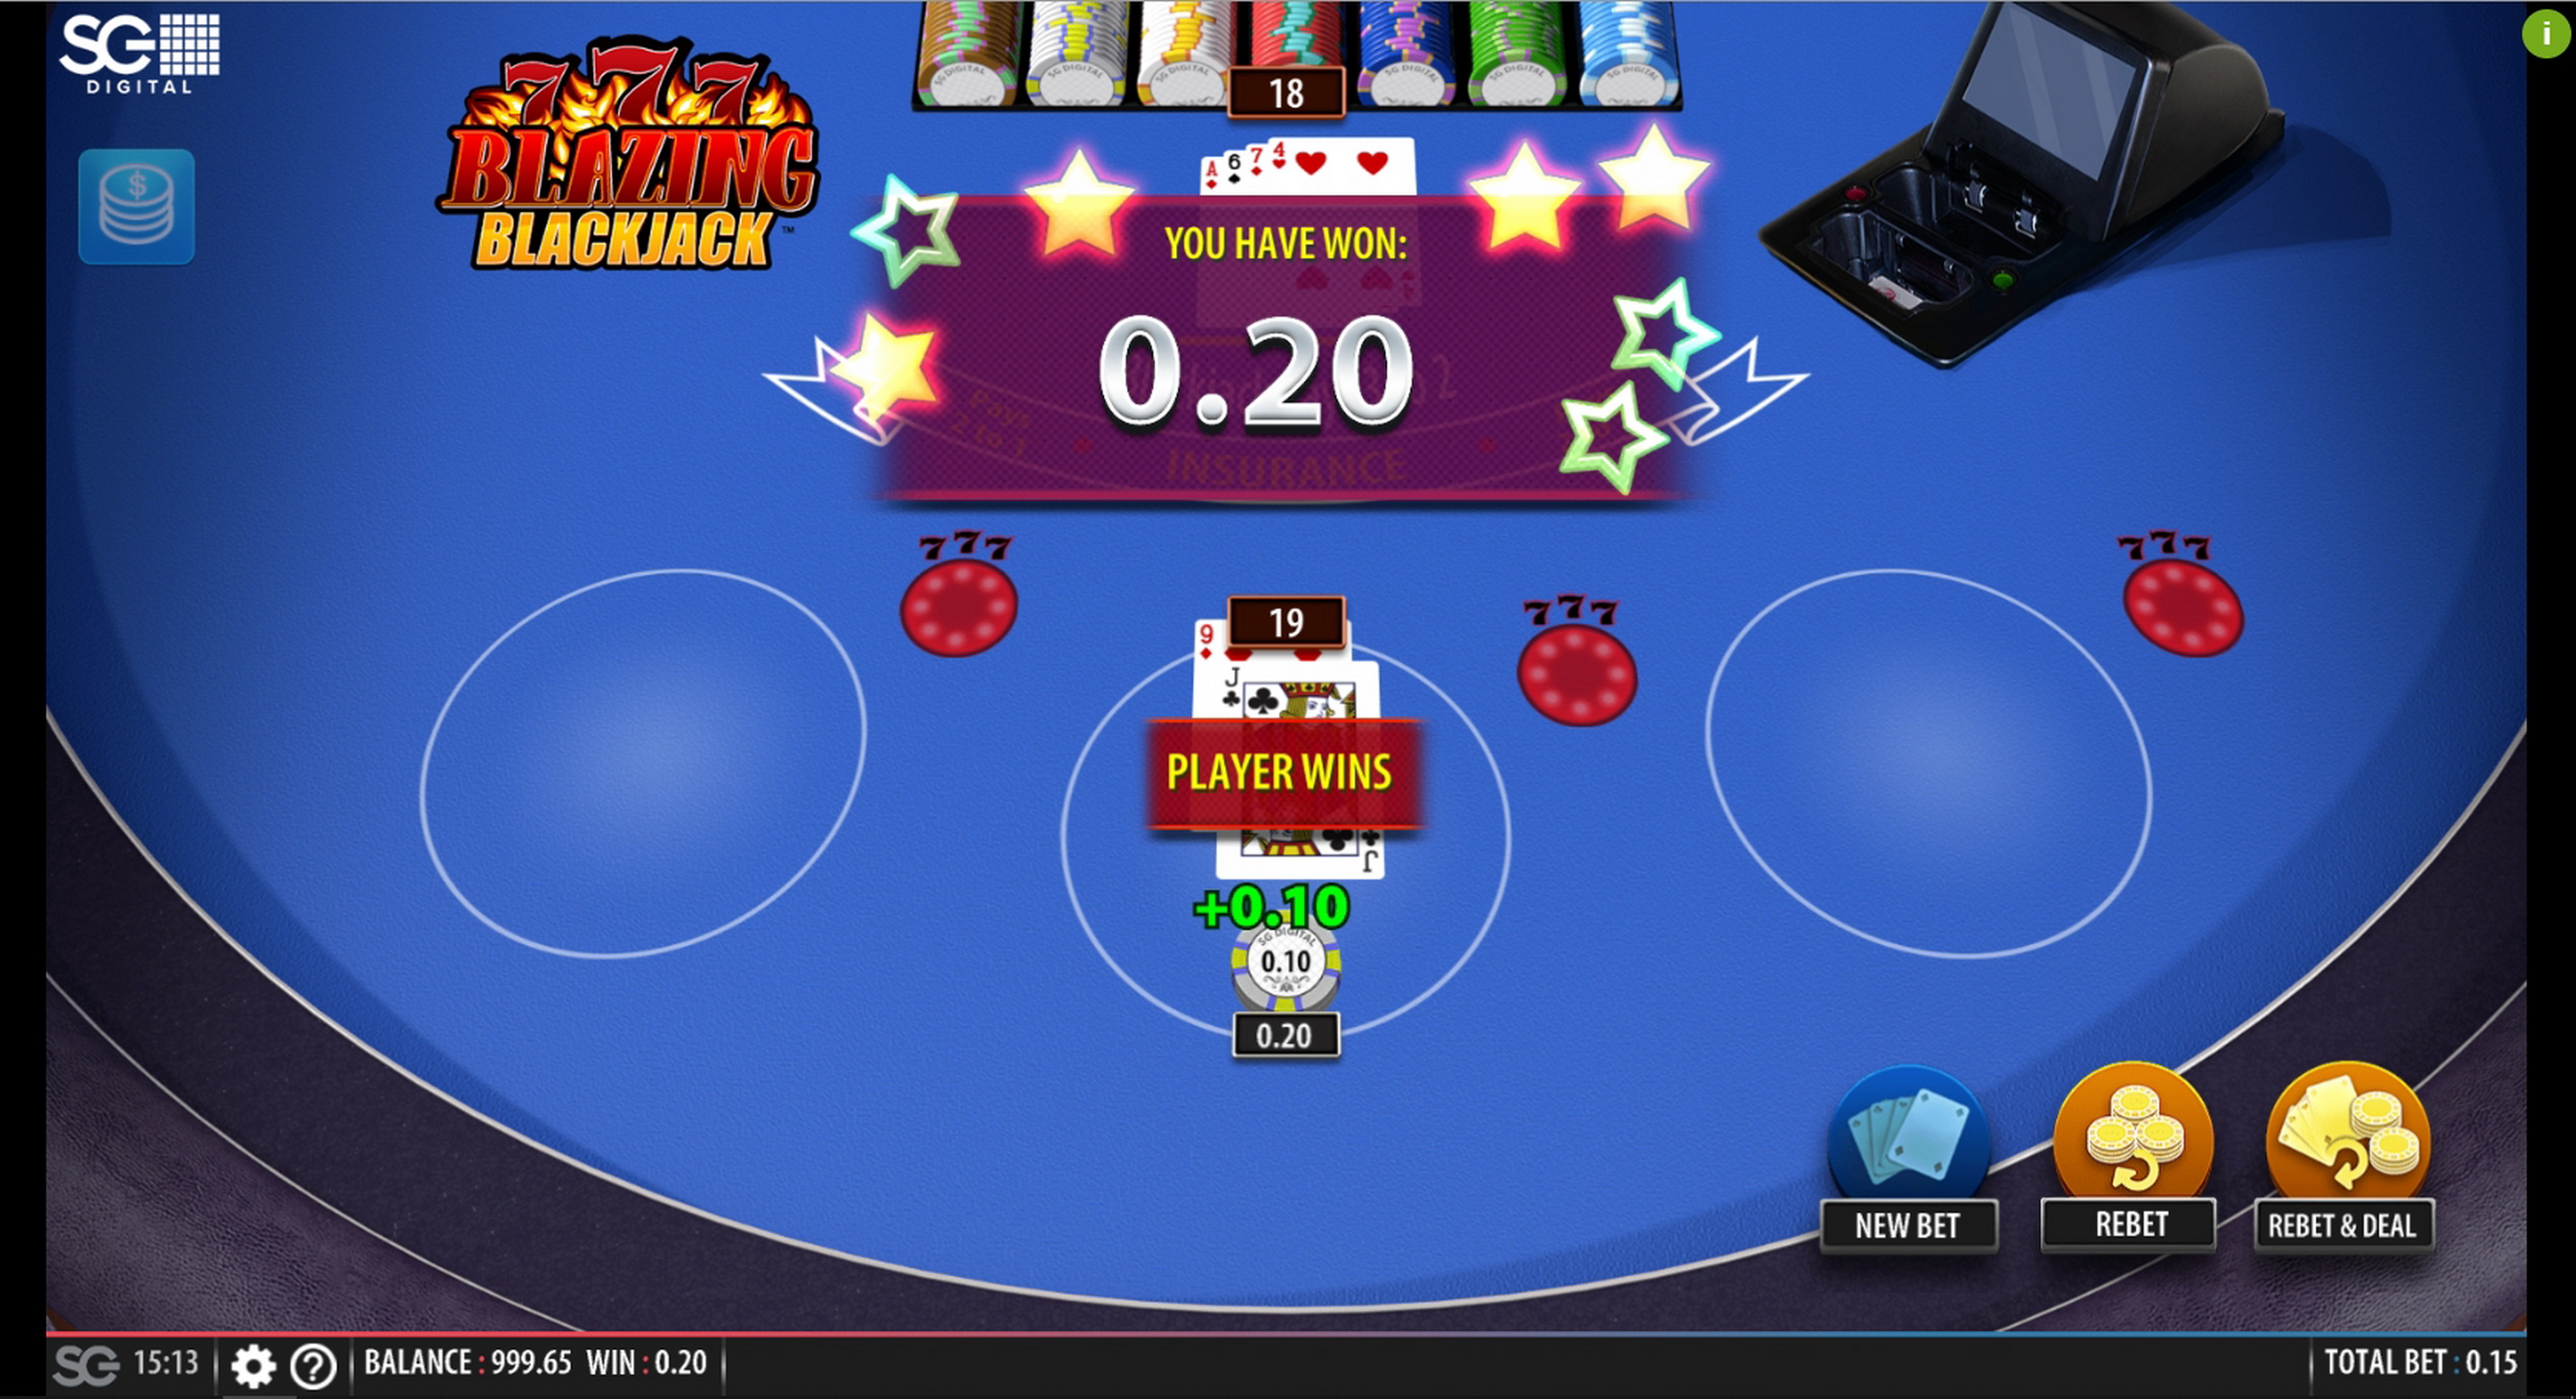 Win Money in Blazing 7's Blackjack Free Slot Game by Shuffle Master